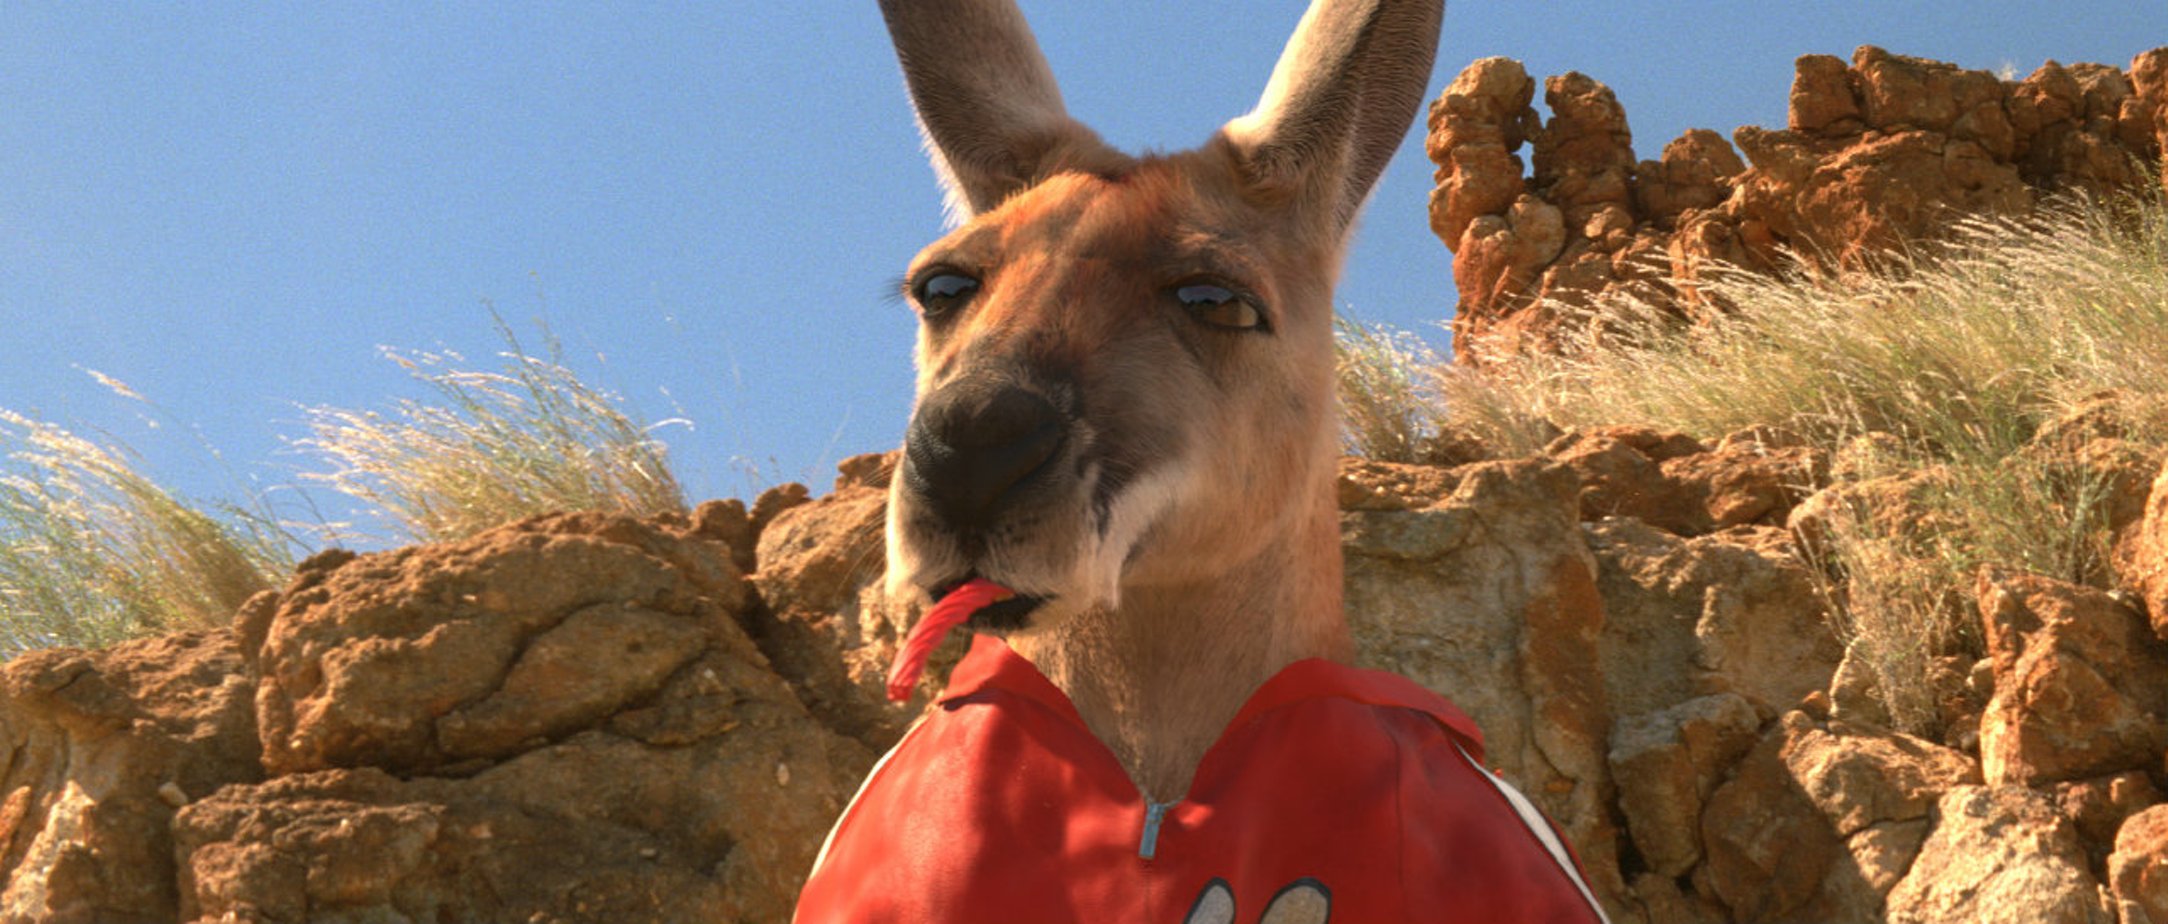 Фильм про кенгуру 2003